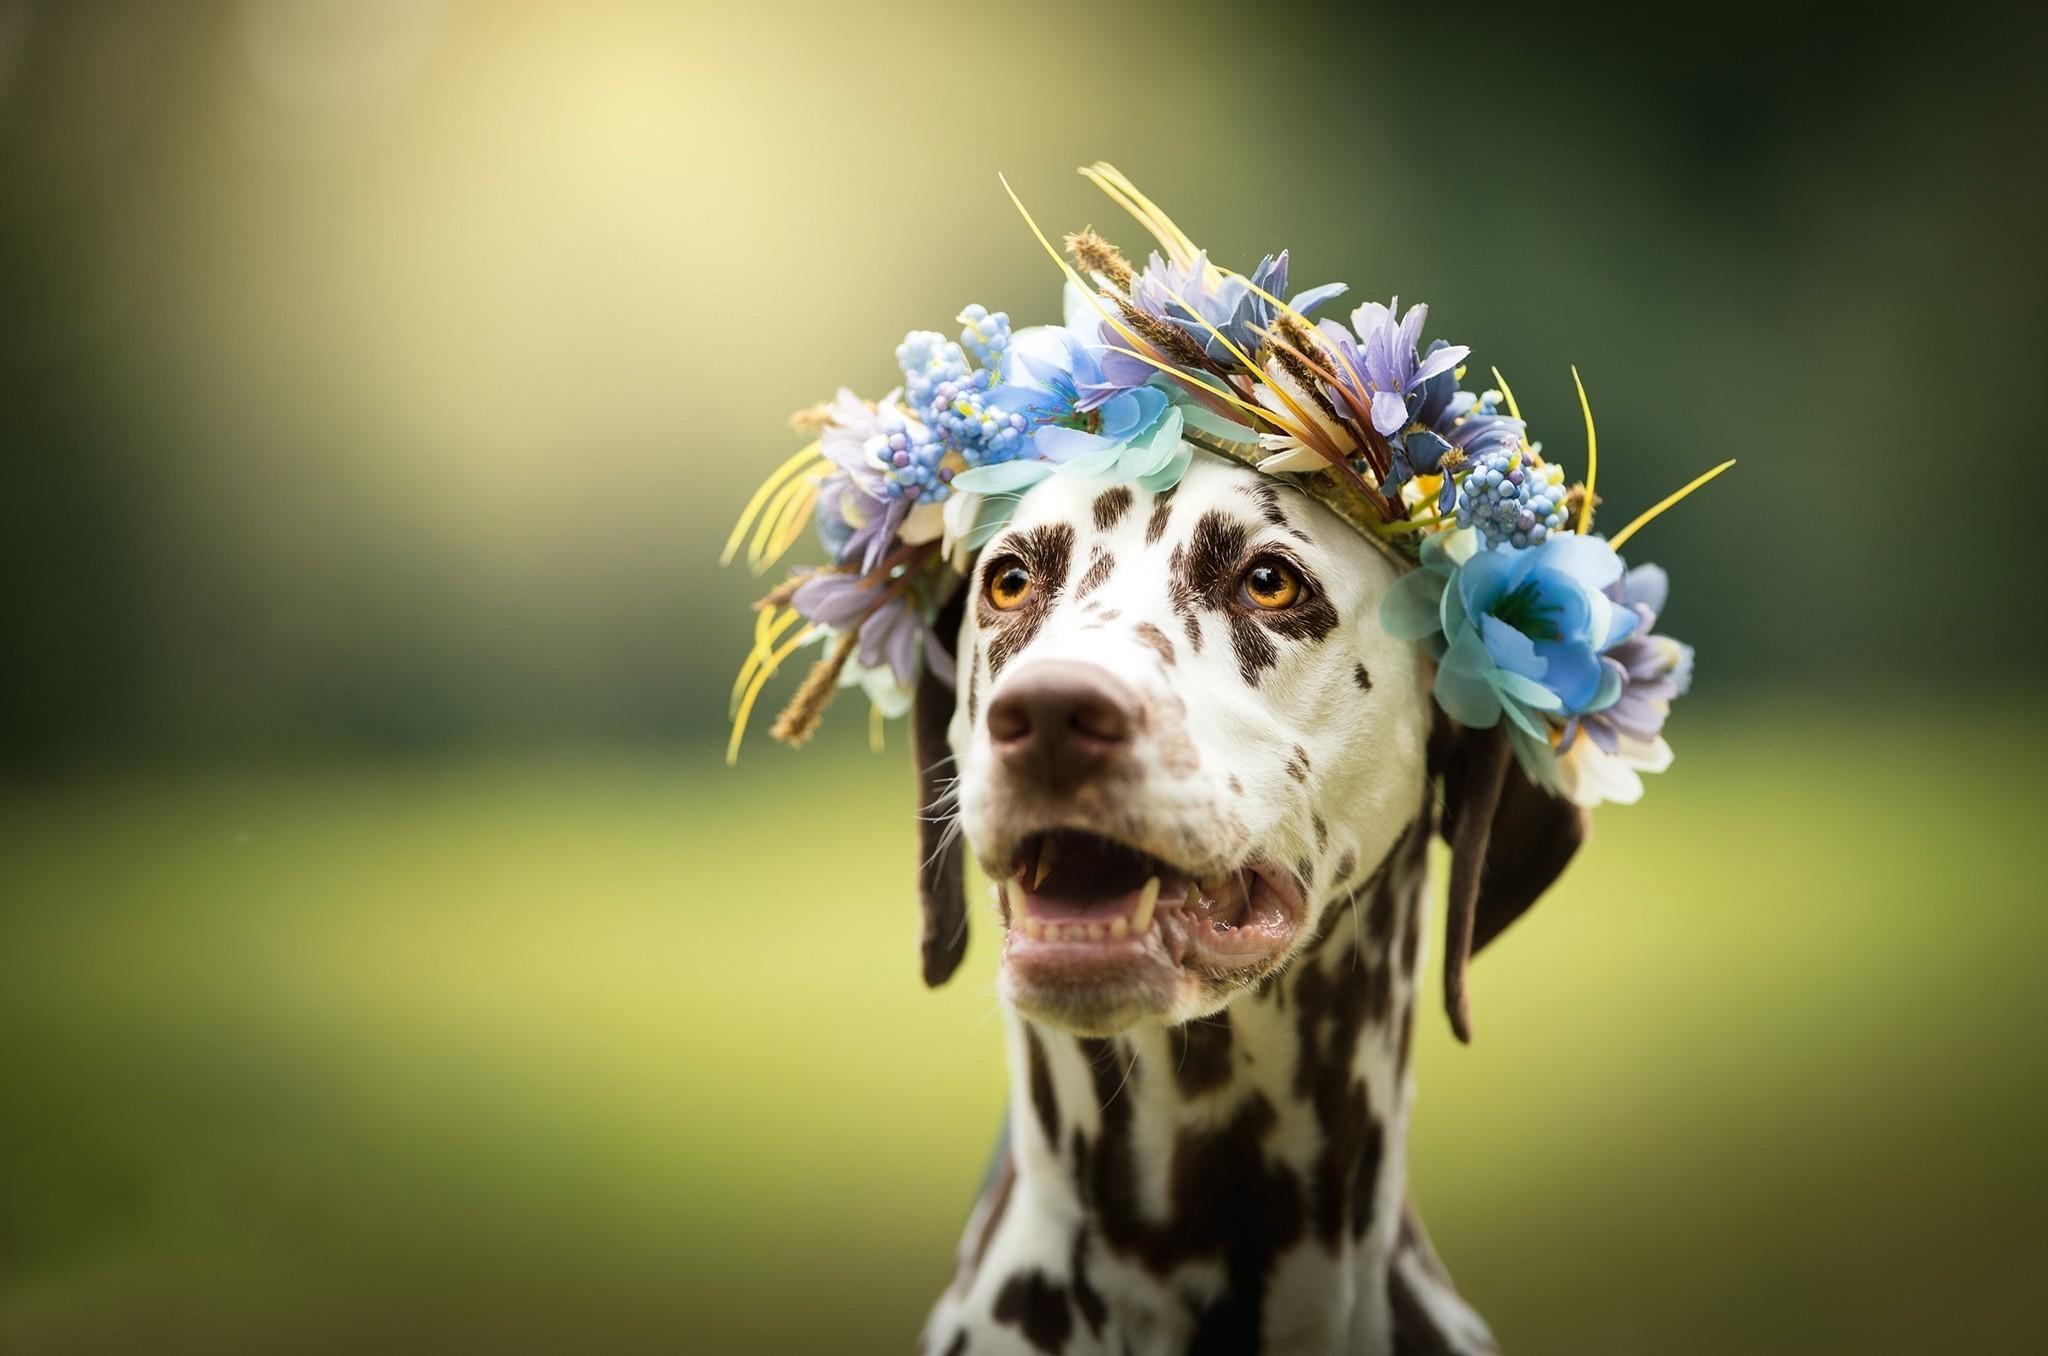 Download 2048x1356 Dalmatian Dog, Muzzle, Teeth, Flowers, Blurred